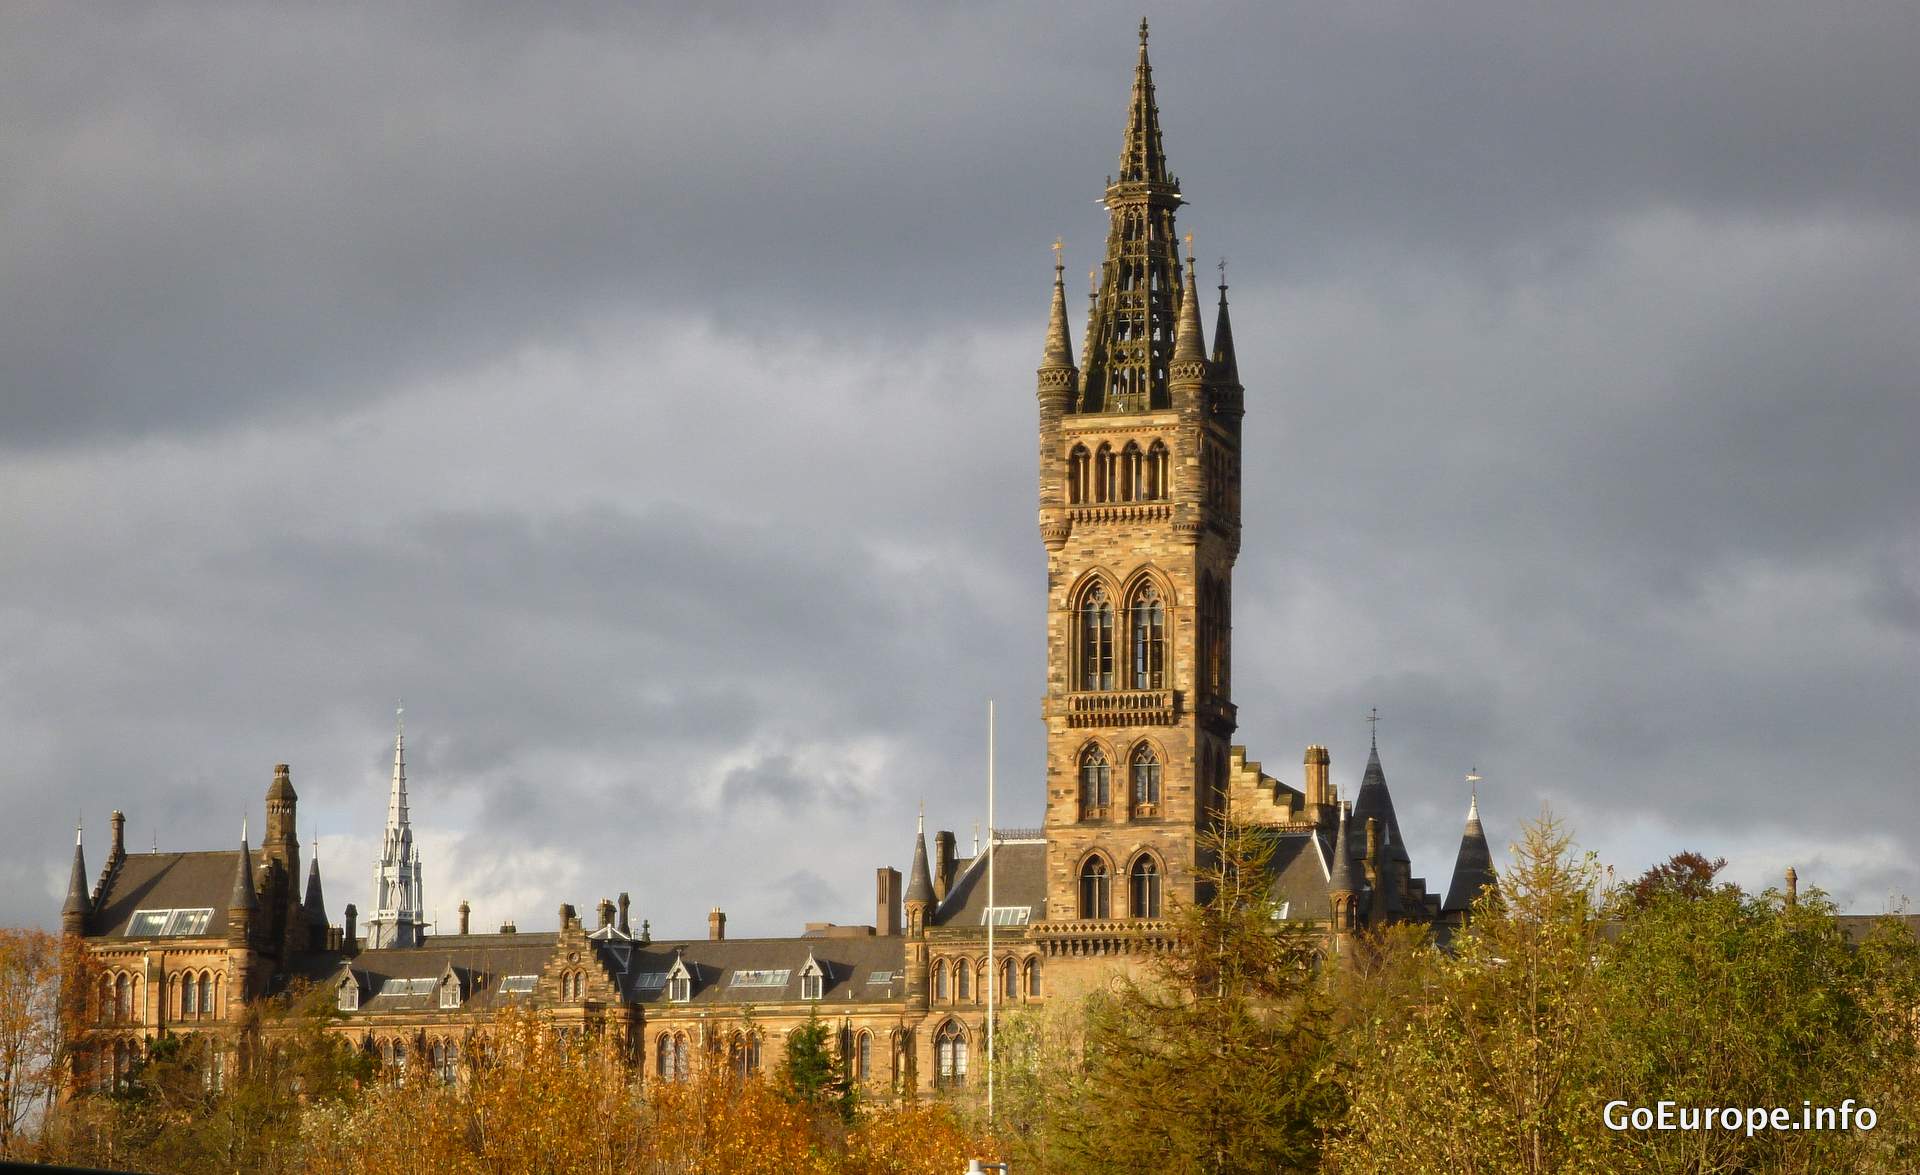 Glasgow University.